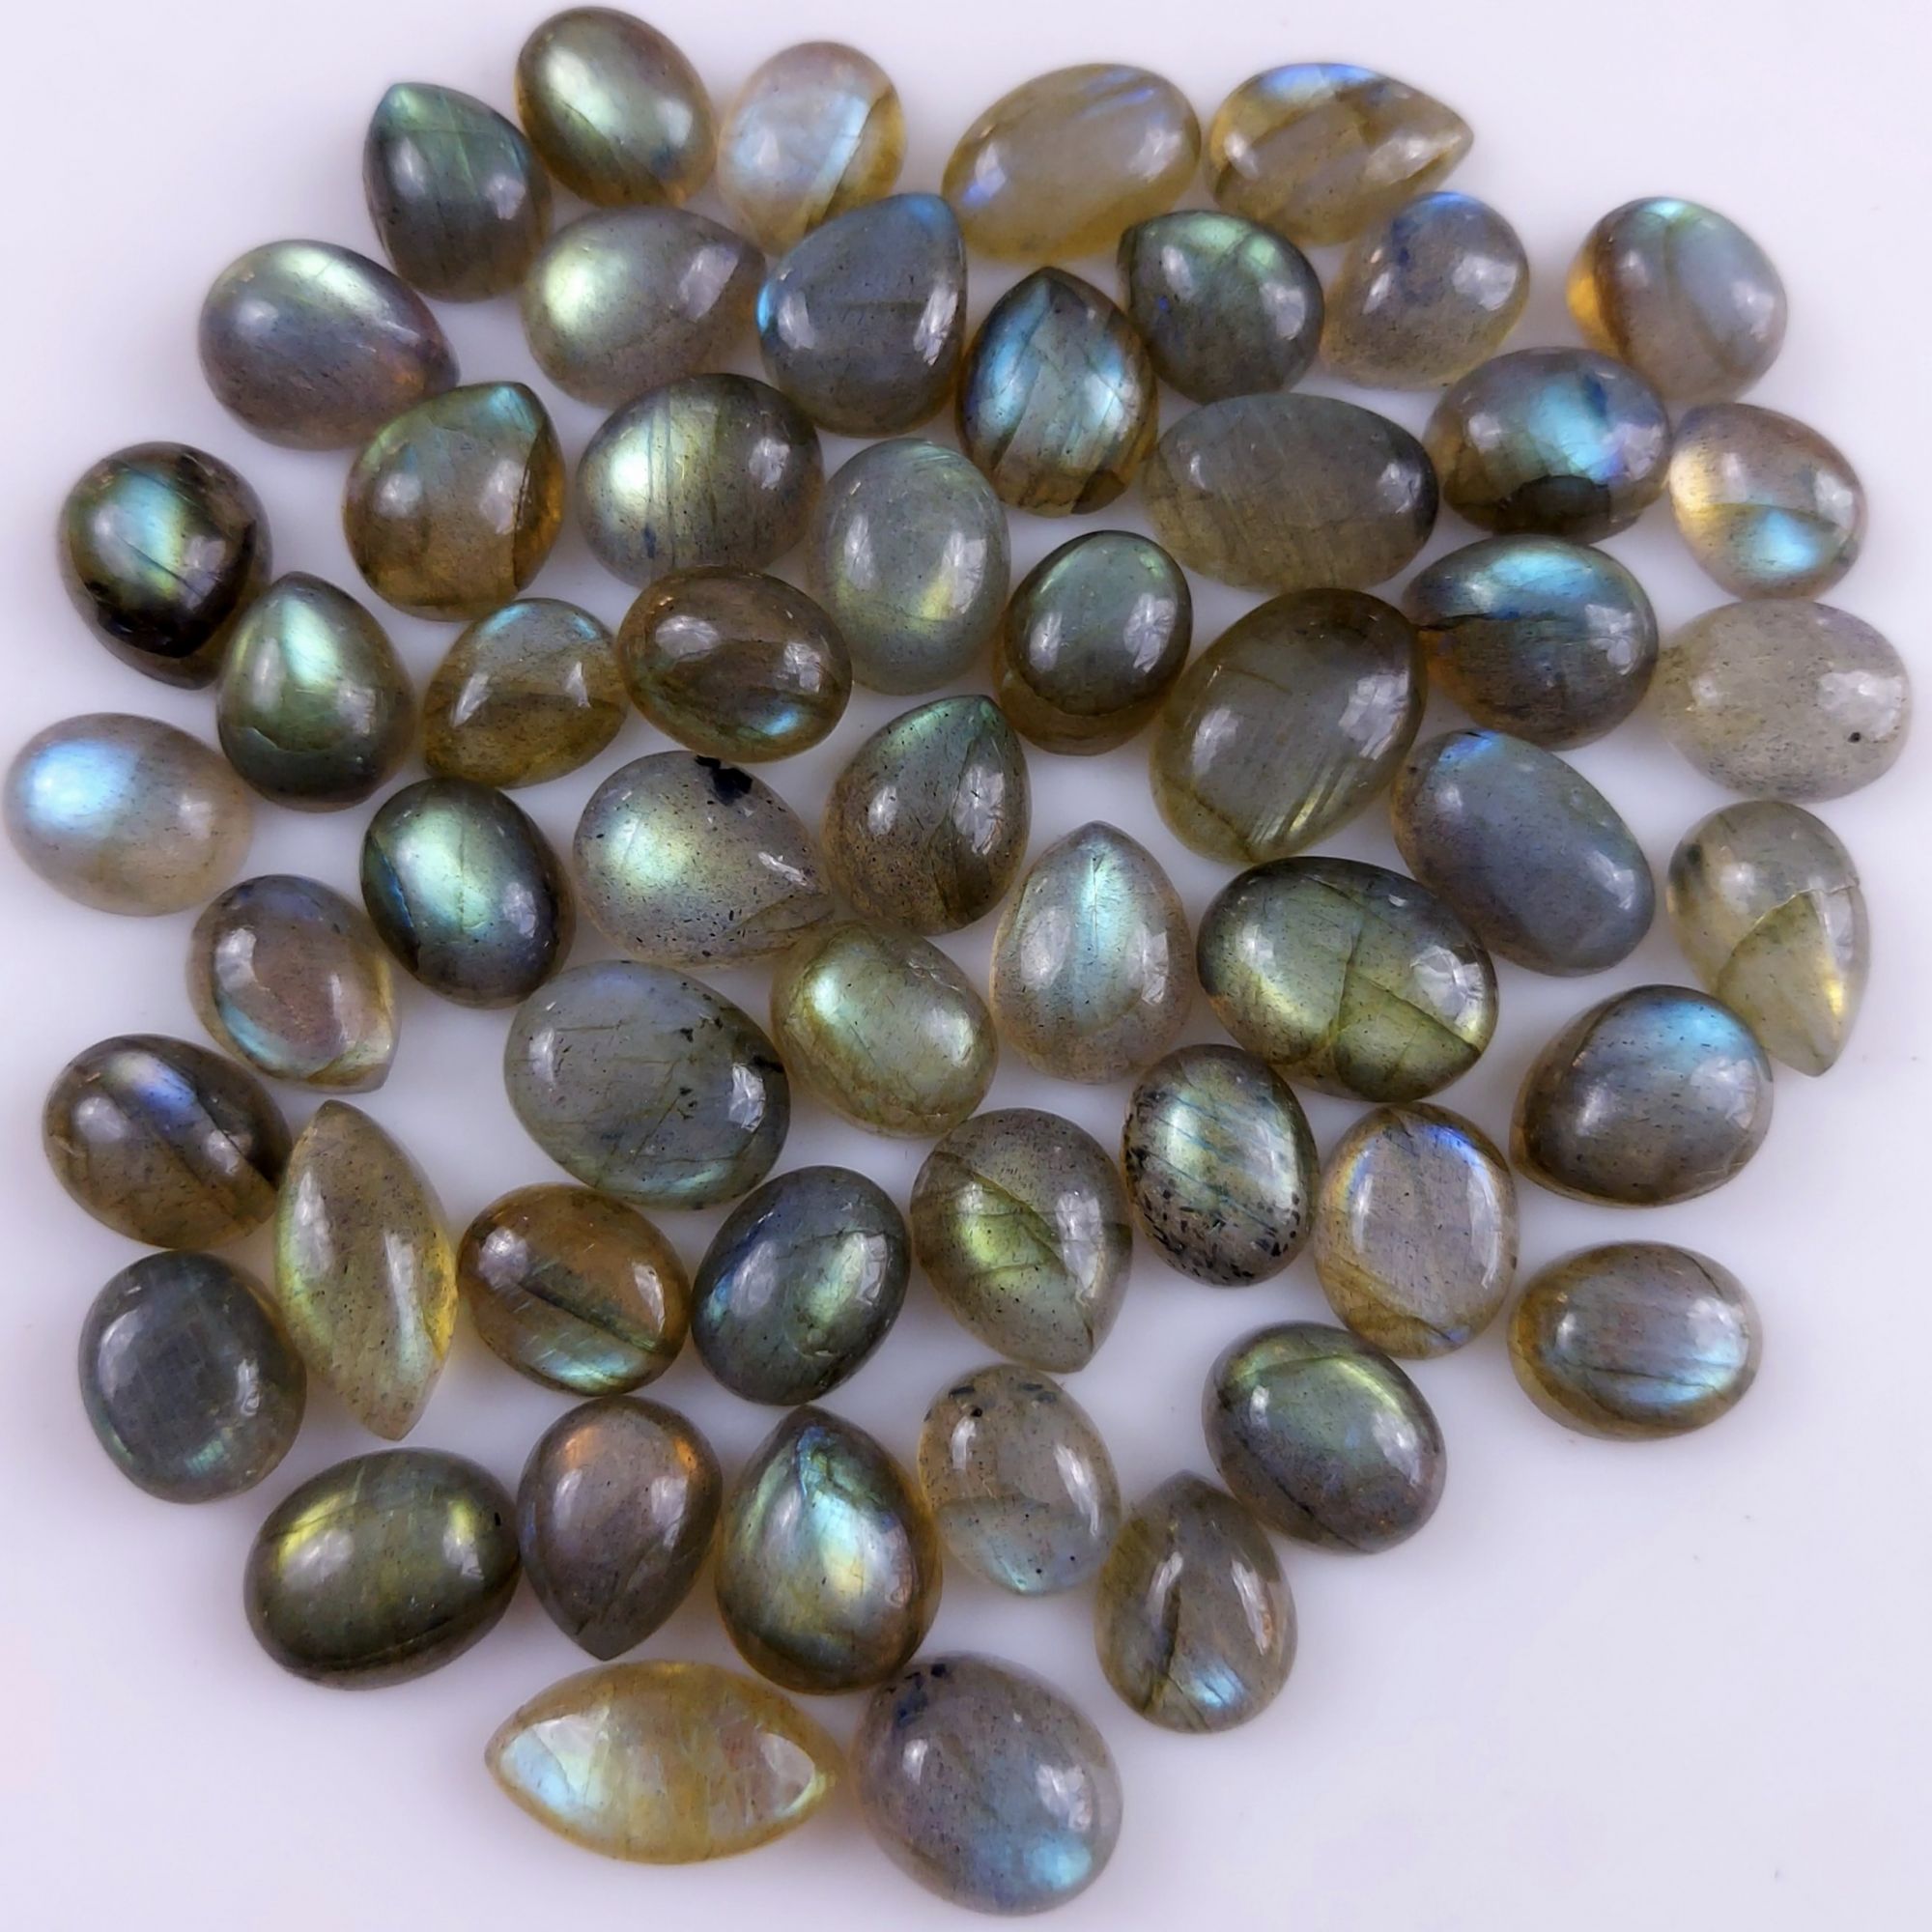 55 Pcs202Cts Natural Multifire Labradorite Loose Cabochon Gemstone Lot for Jewelry Making  11x7 7x5mm#1052